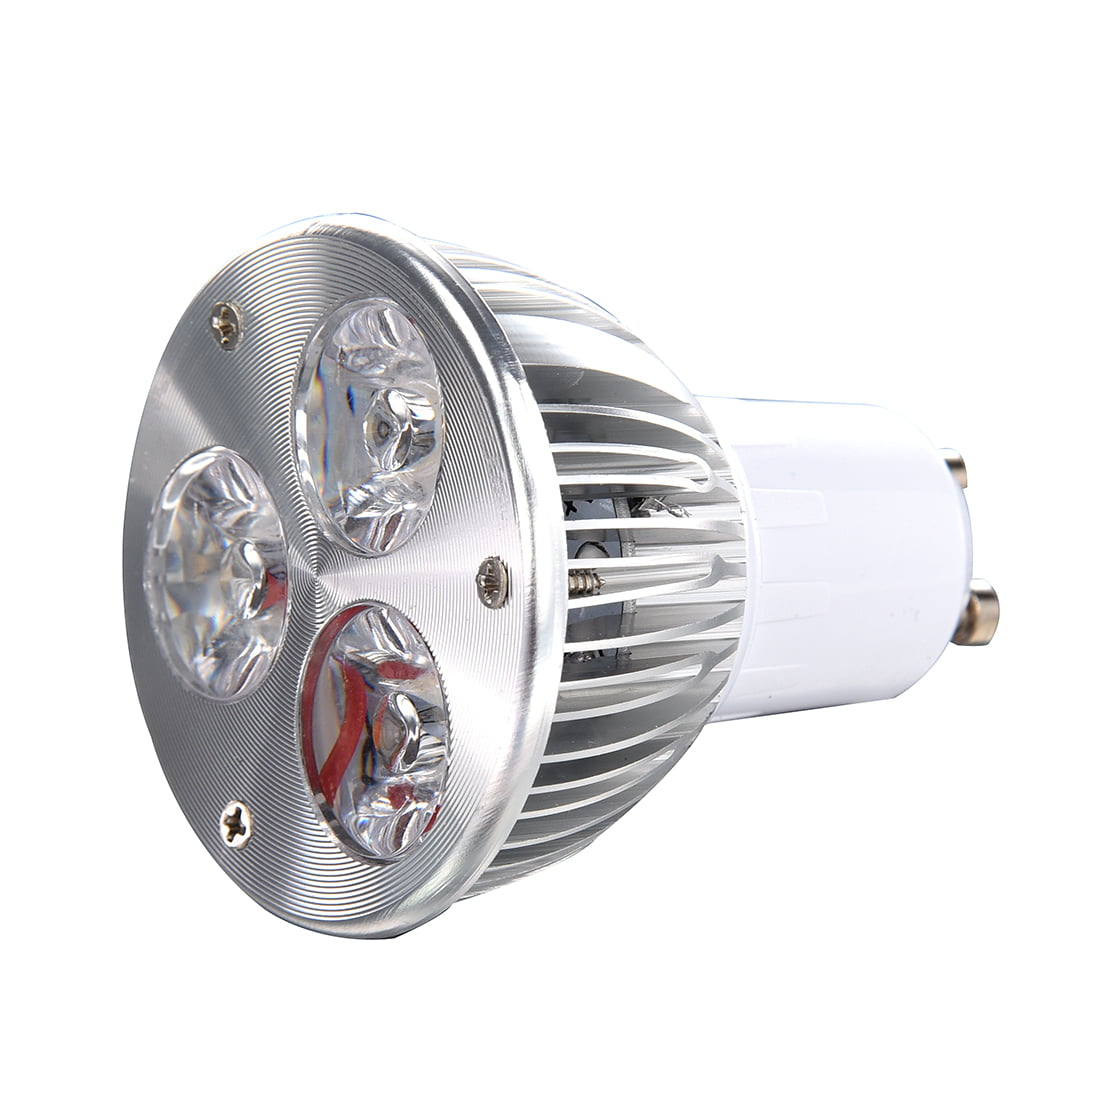 Lot of 10 GU10 MR16 3W 4W HIGH POWER LED ENERGY SAVING LIGHT BULB SPOT LAMP 